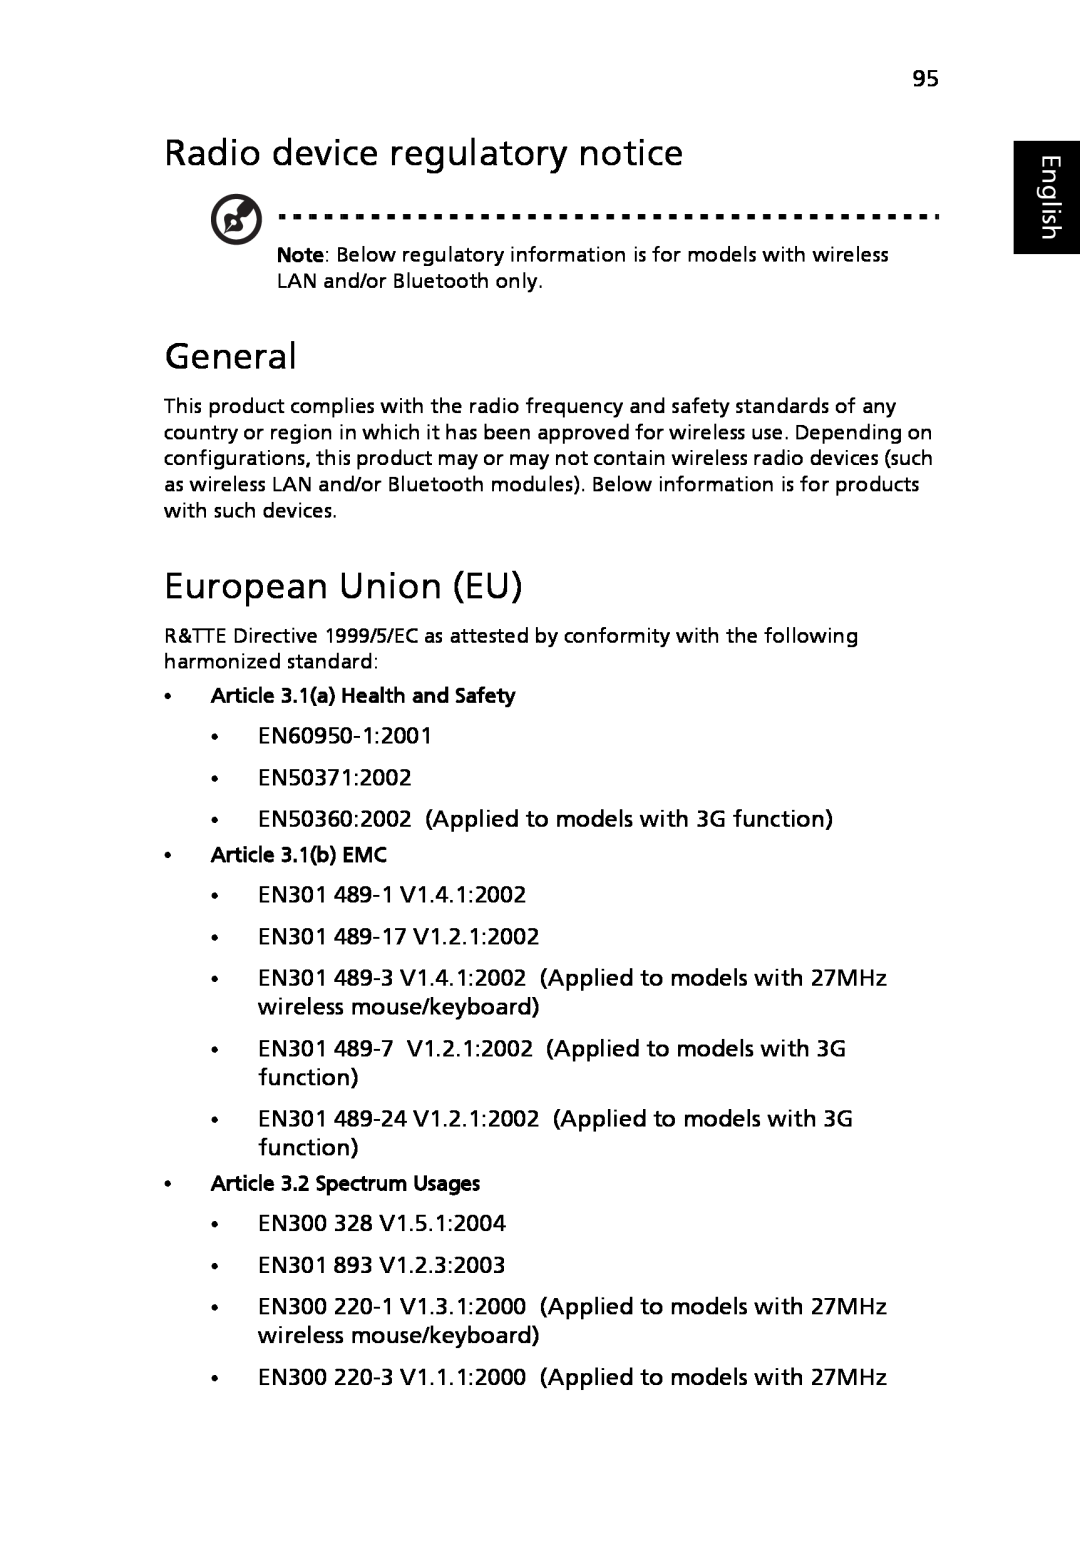 Acer 9120 manual Radio device regulatory notice, General, European Union EU, English 